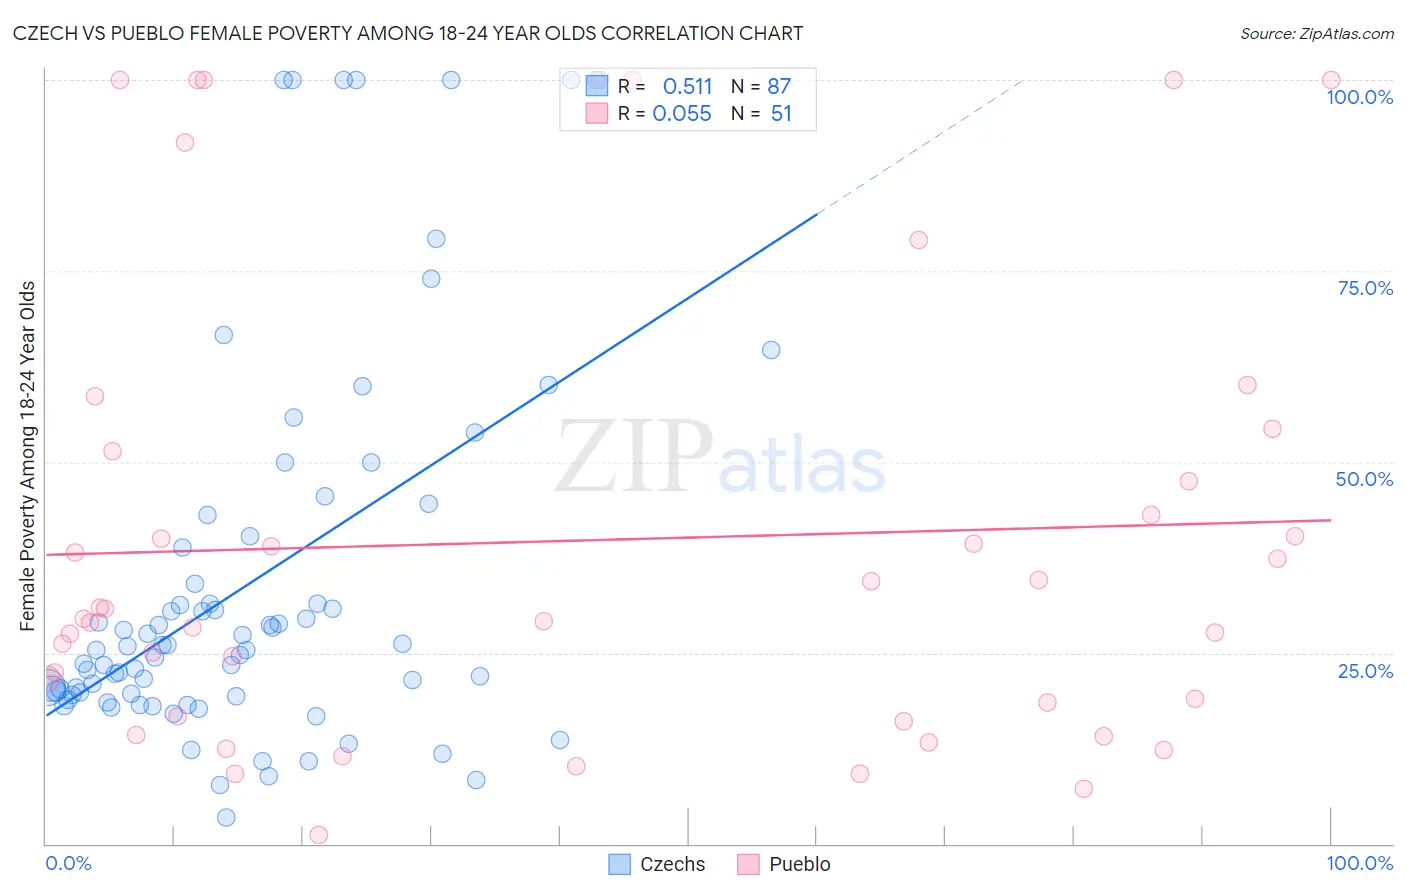 Czech vs Pueblo Female Poverty Among 18-24 Year Olds